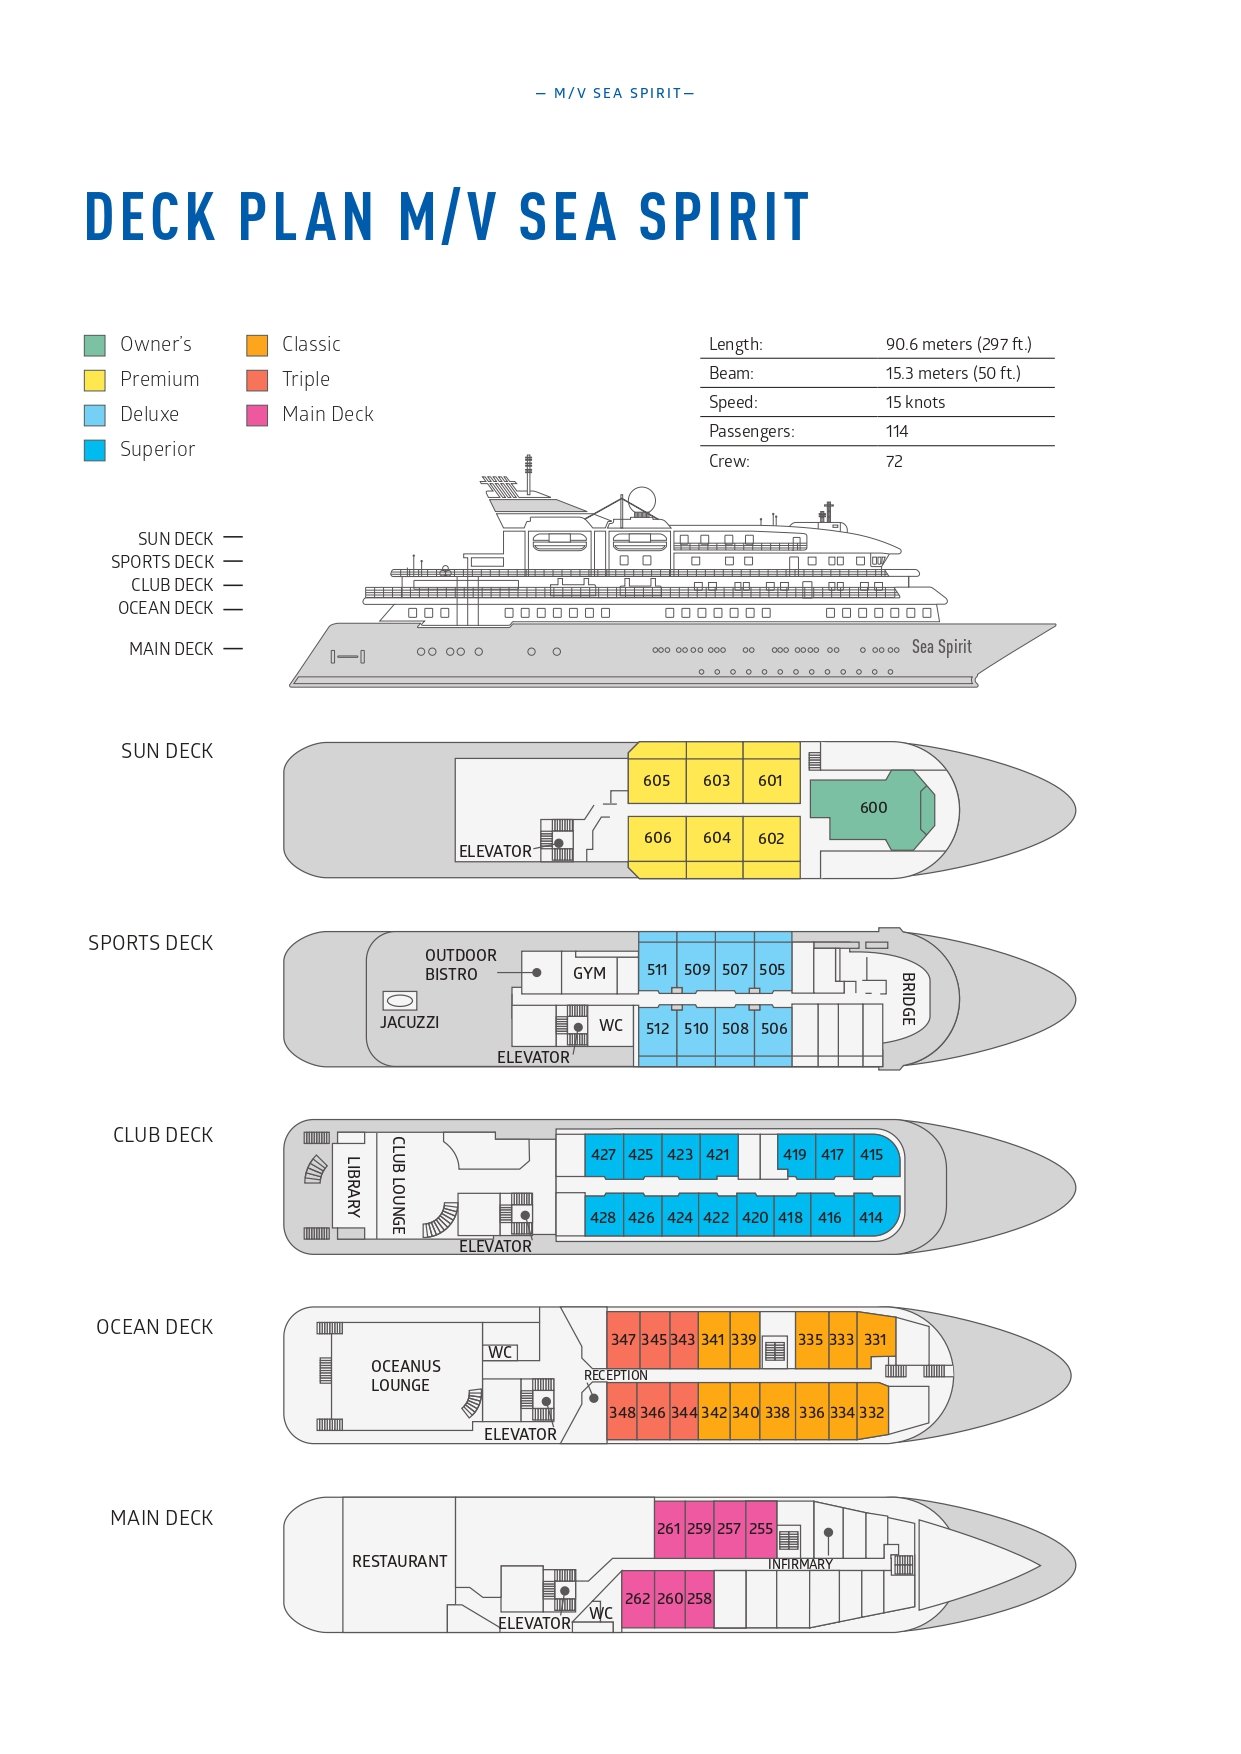 Deck plan detailing Main Deck, Ocean Deck, Club Deck, Sports Deck and Sun Deck of M/V Sea Spirit expedition ship